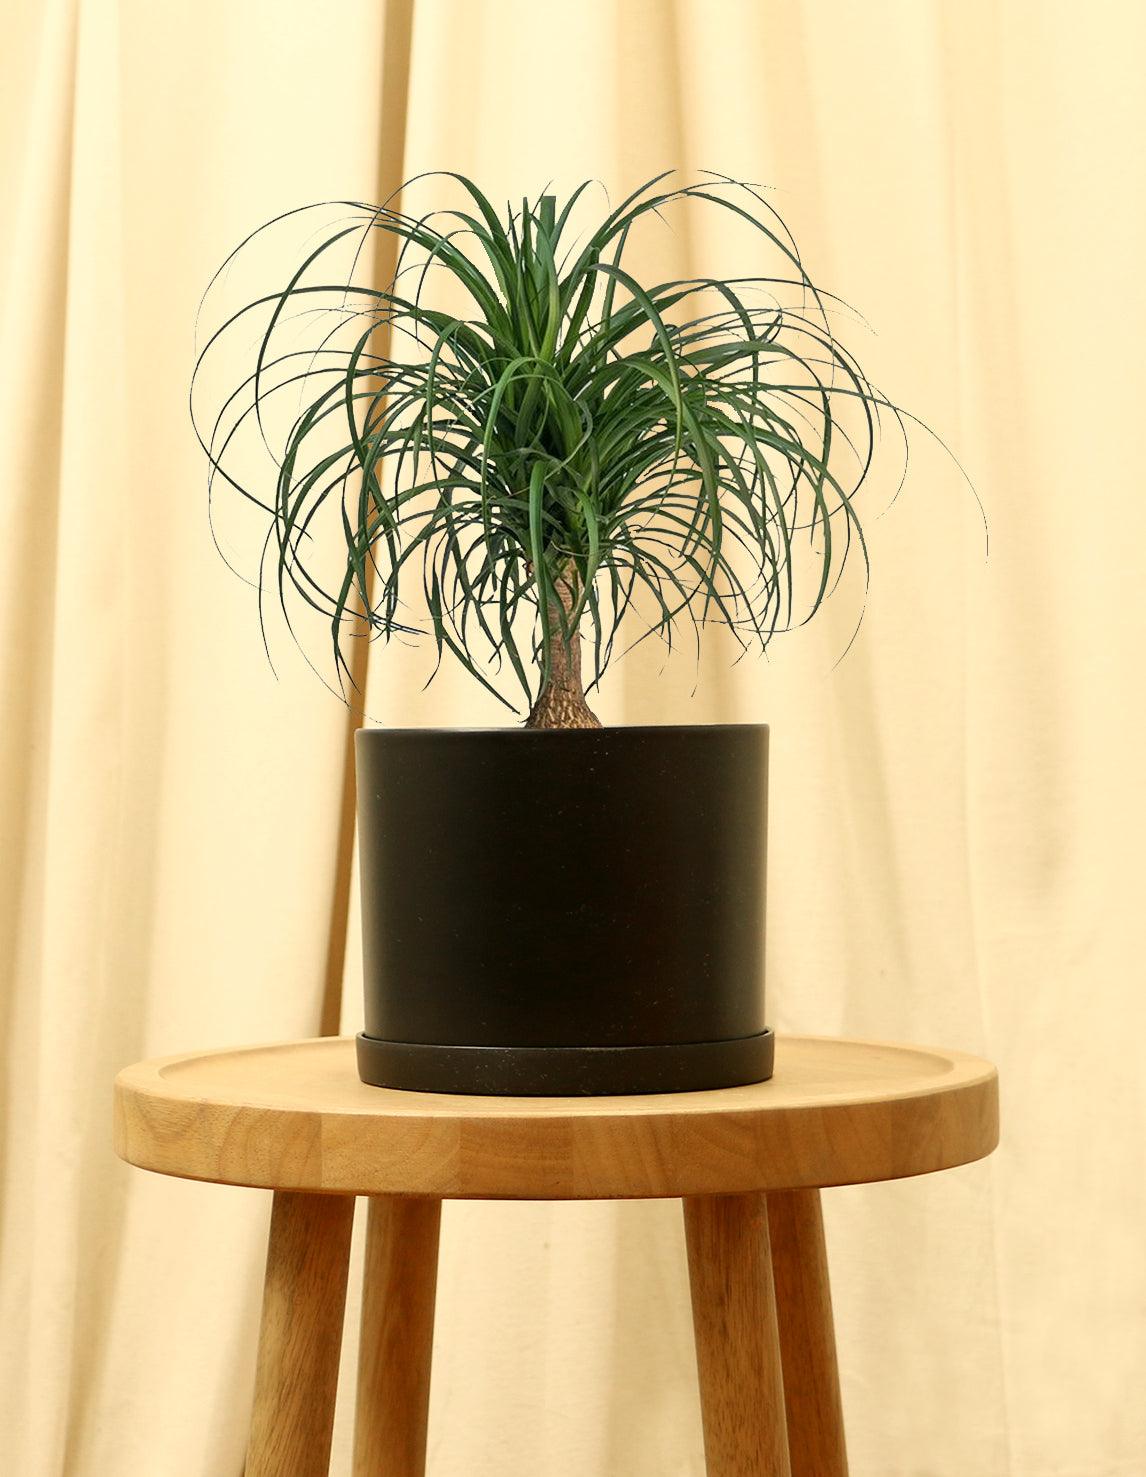 Medium Ponytail Palm Plant in black pot.